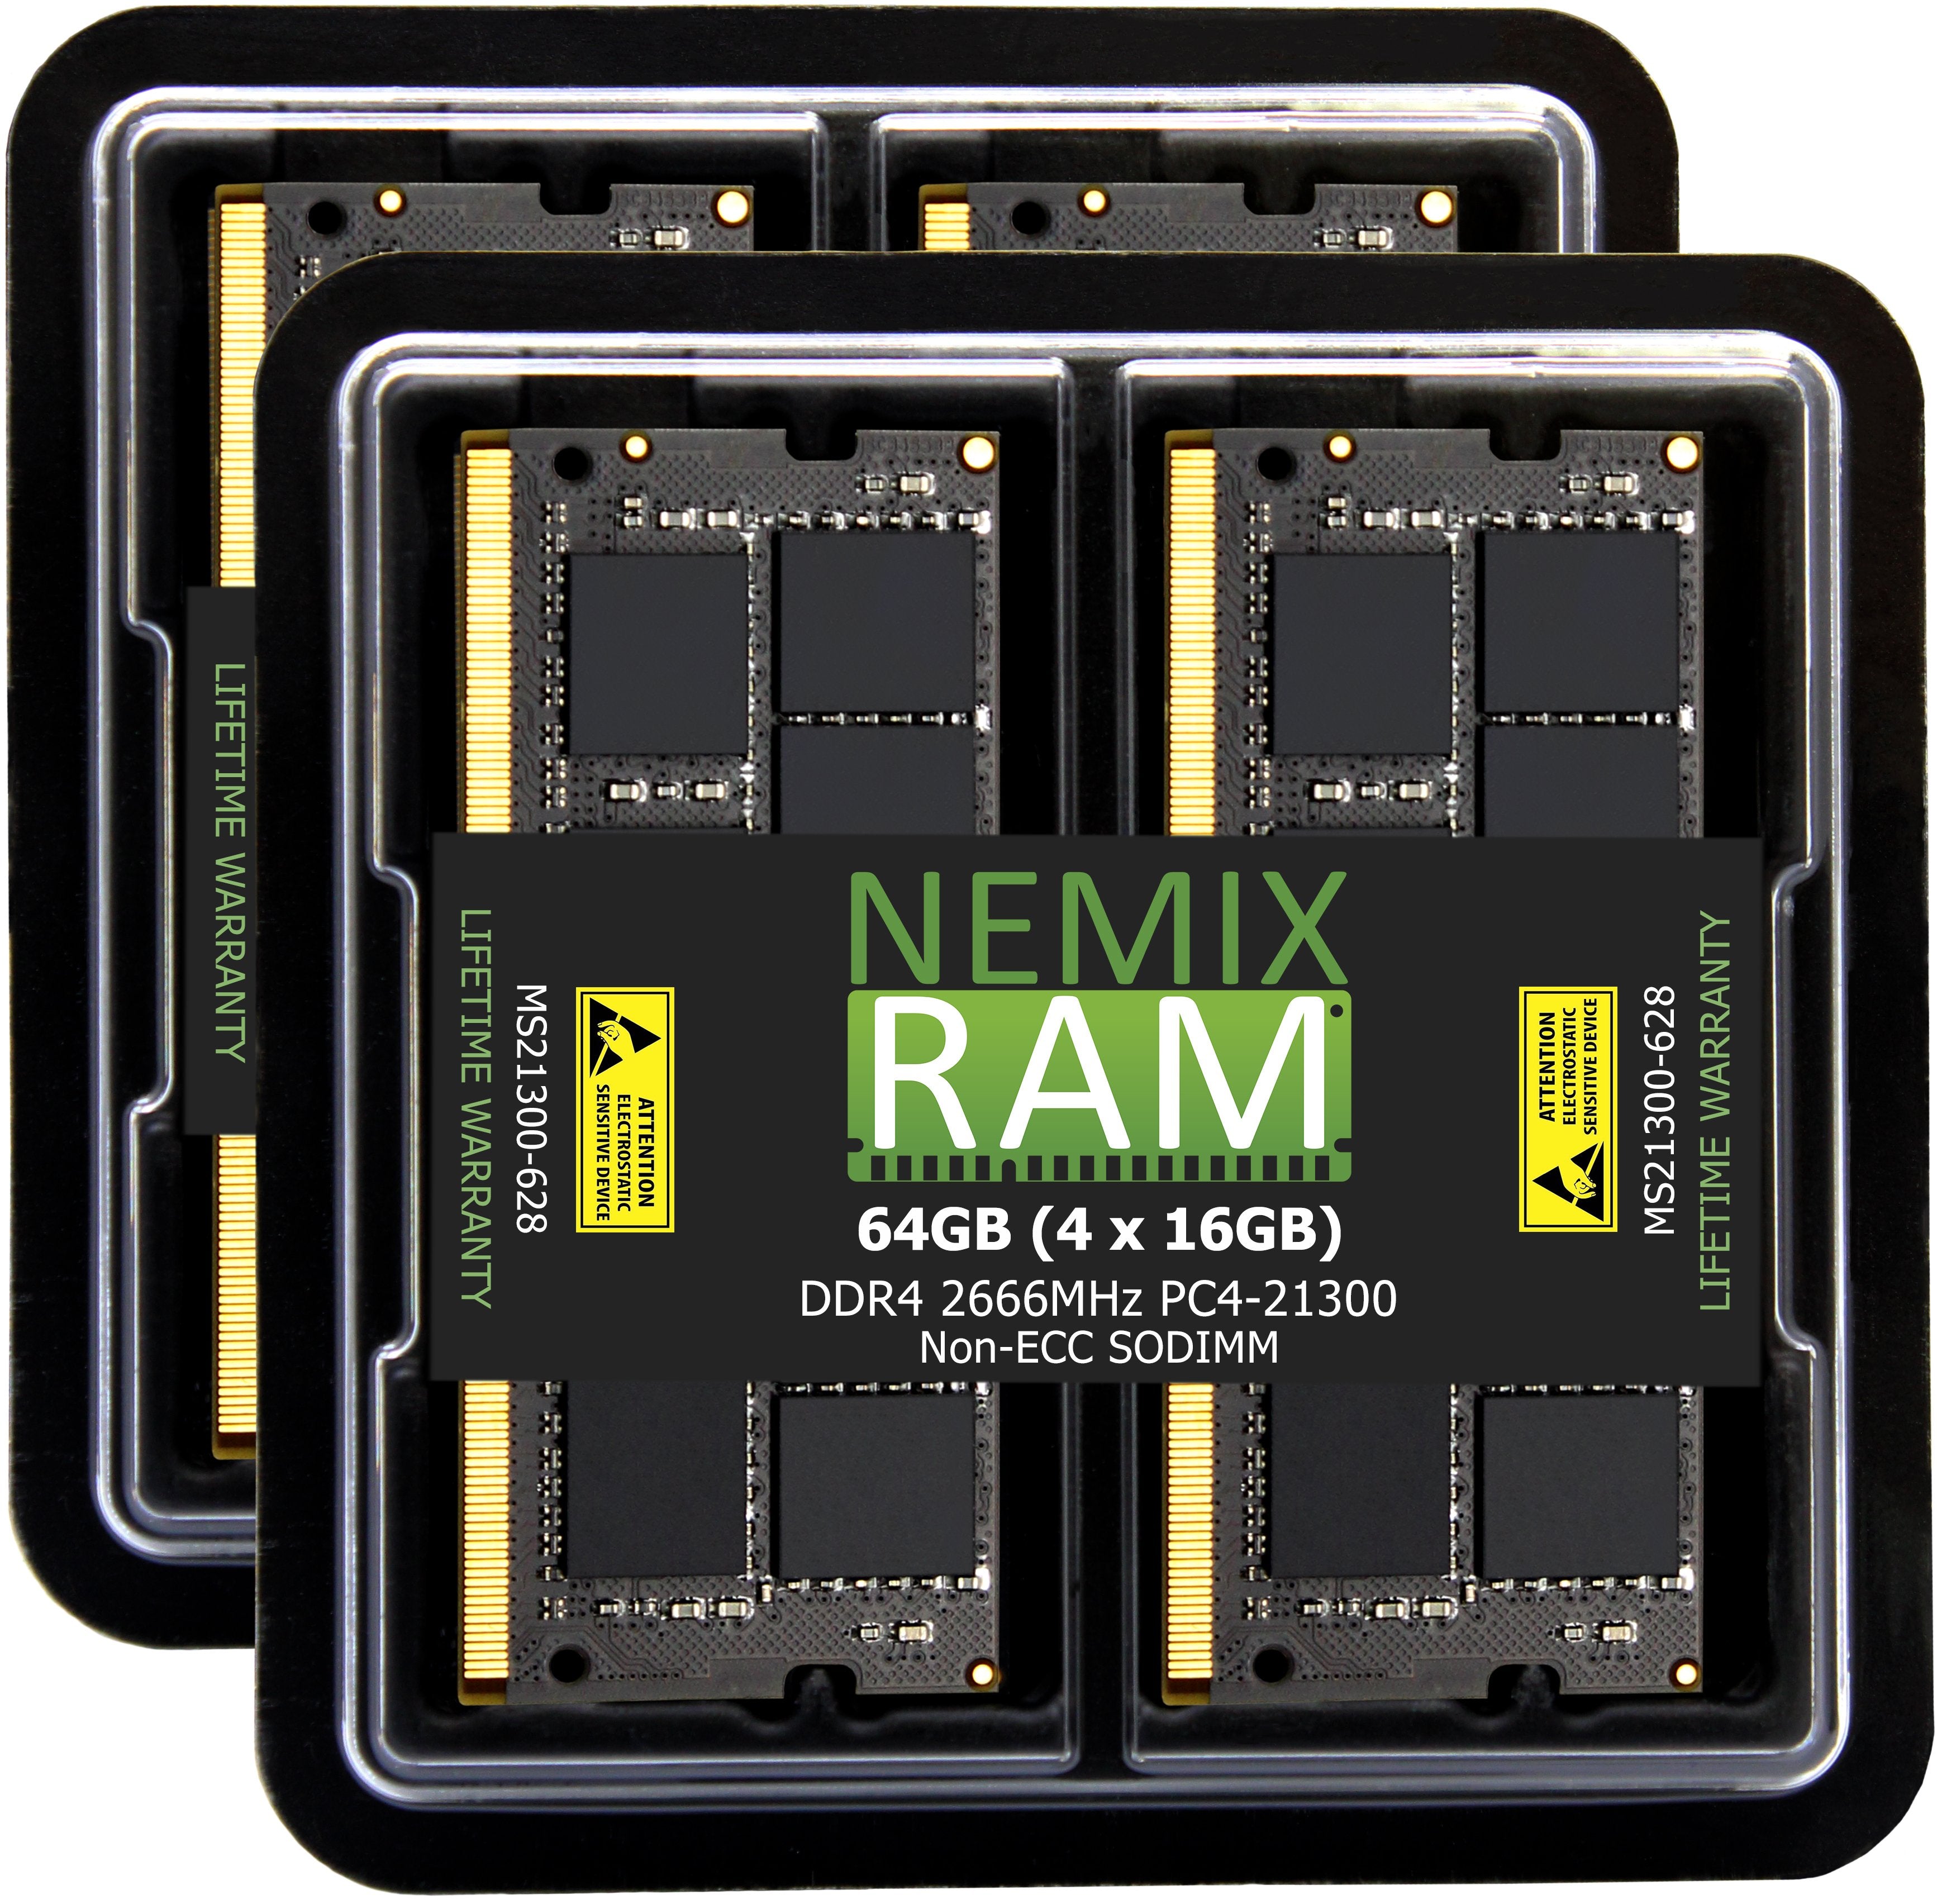 DDR4 2666MHZ PC4-21300 SODIMM for Apple Mac Mini 8,1 Late 2018